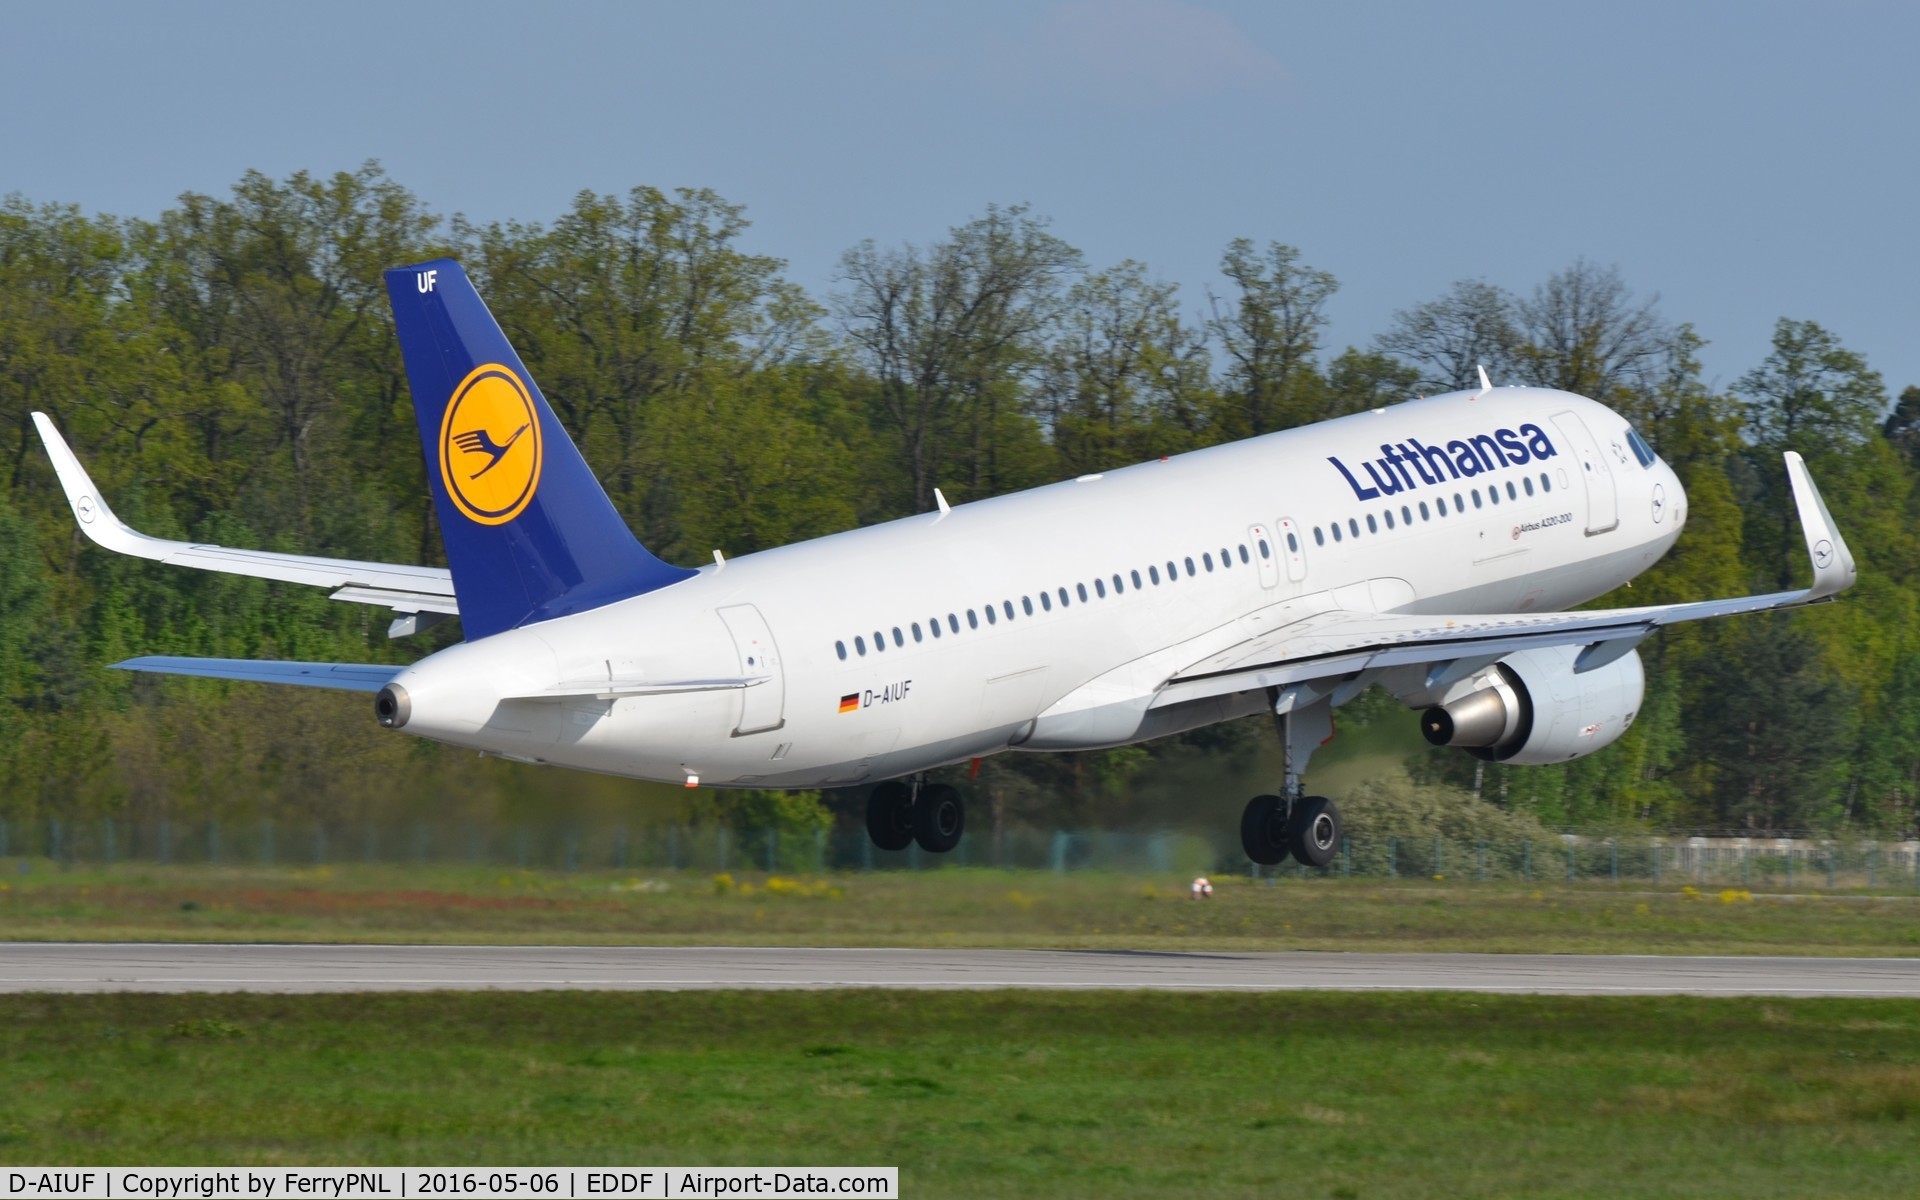 D-AIUF, 2014 Airbus A320-214 C/N 6141, Lufthans A320 lifting-off